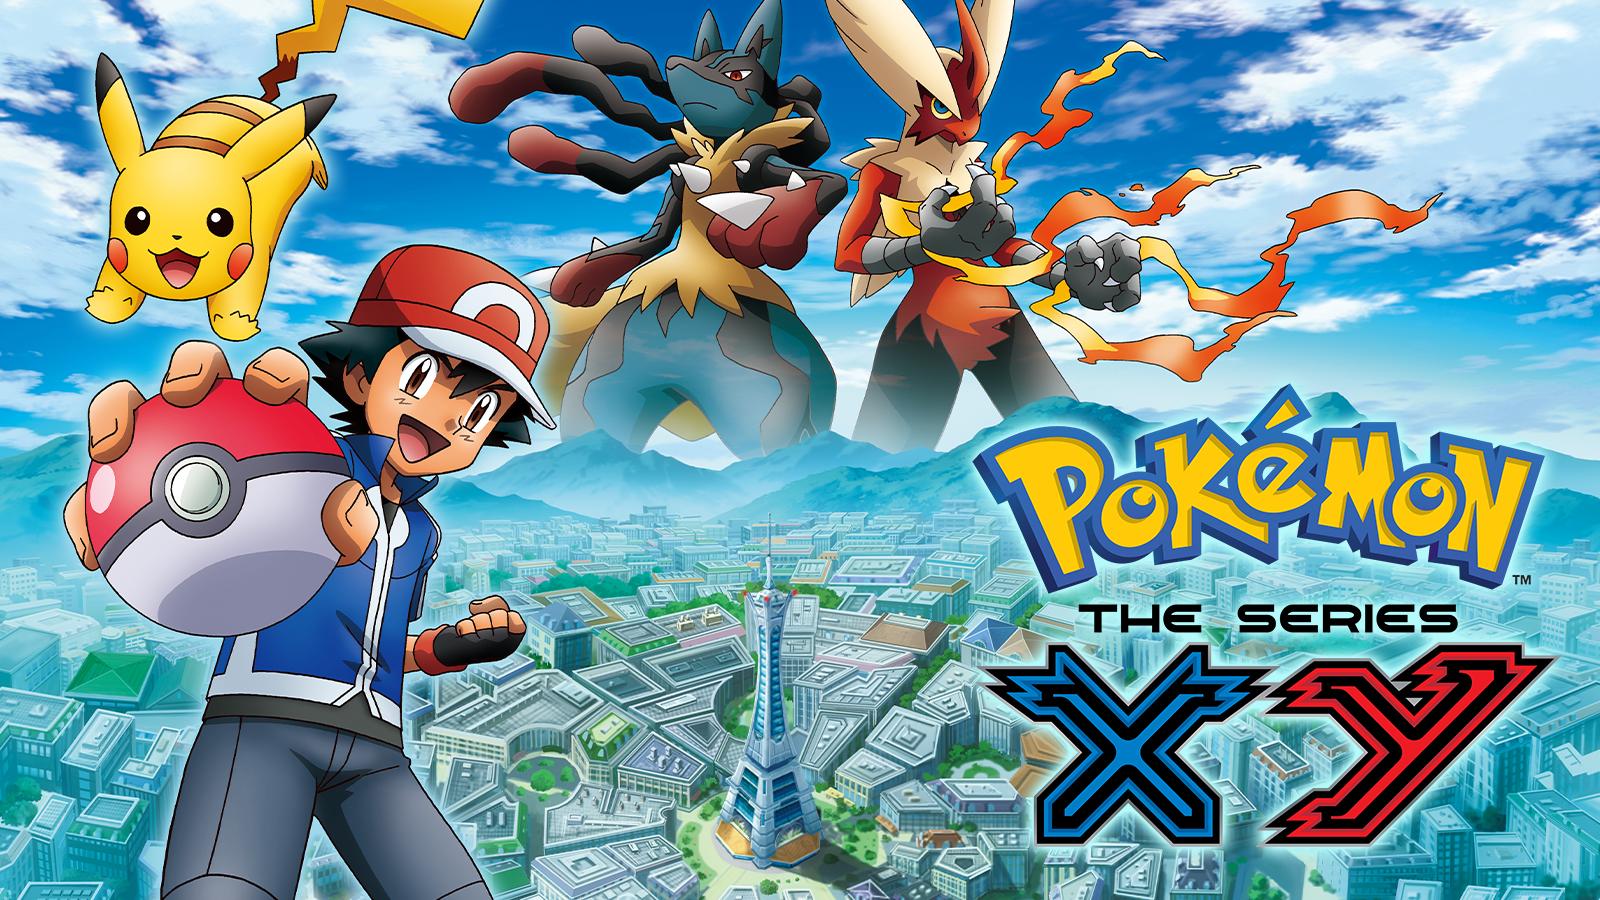 Watch Pokémon the Series: XY Streaming Online